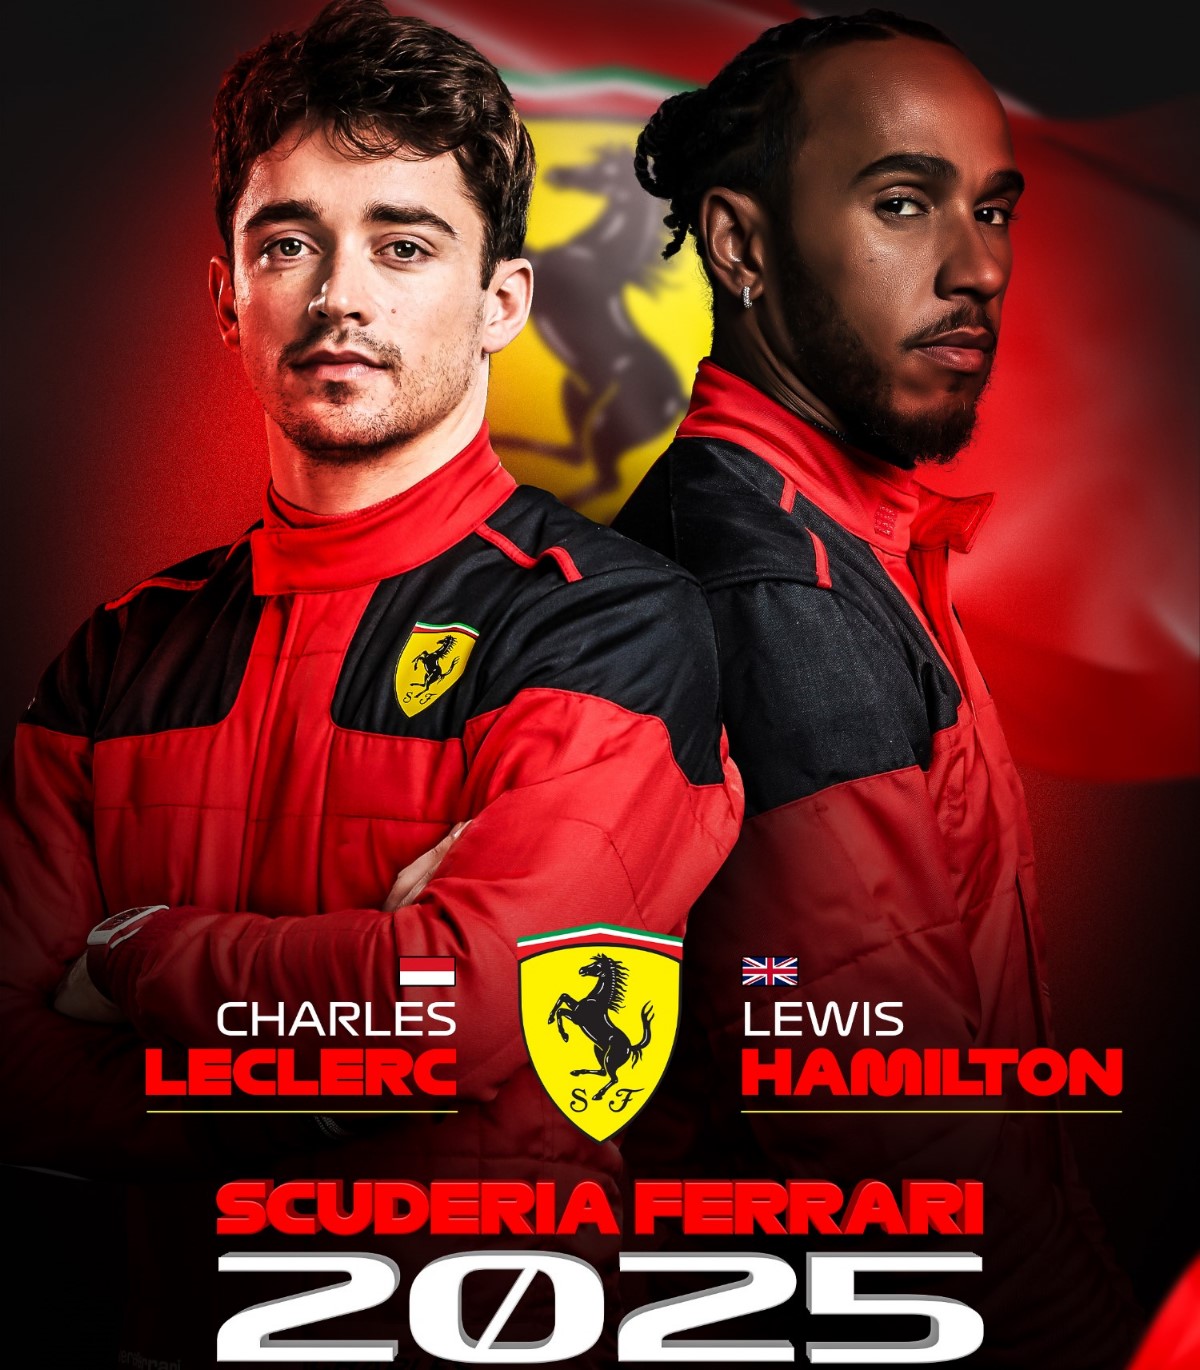 Charles Leclerc and Lewis Hamilton - 2025 and 2026 Ferrari teammates